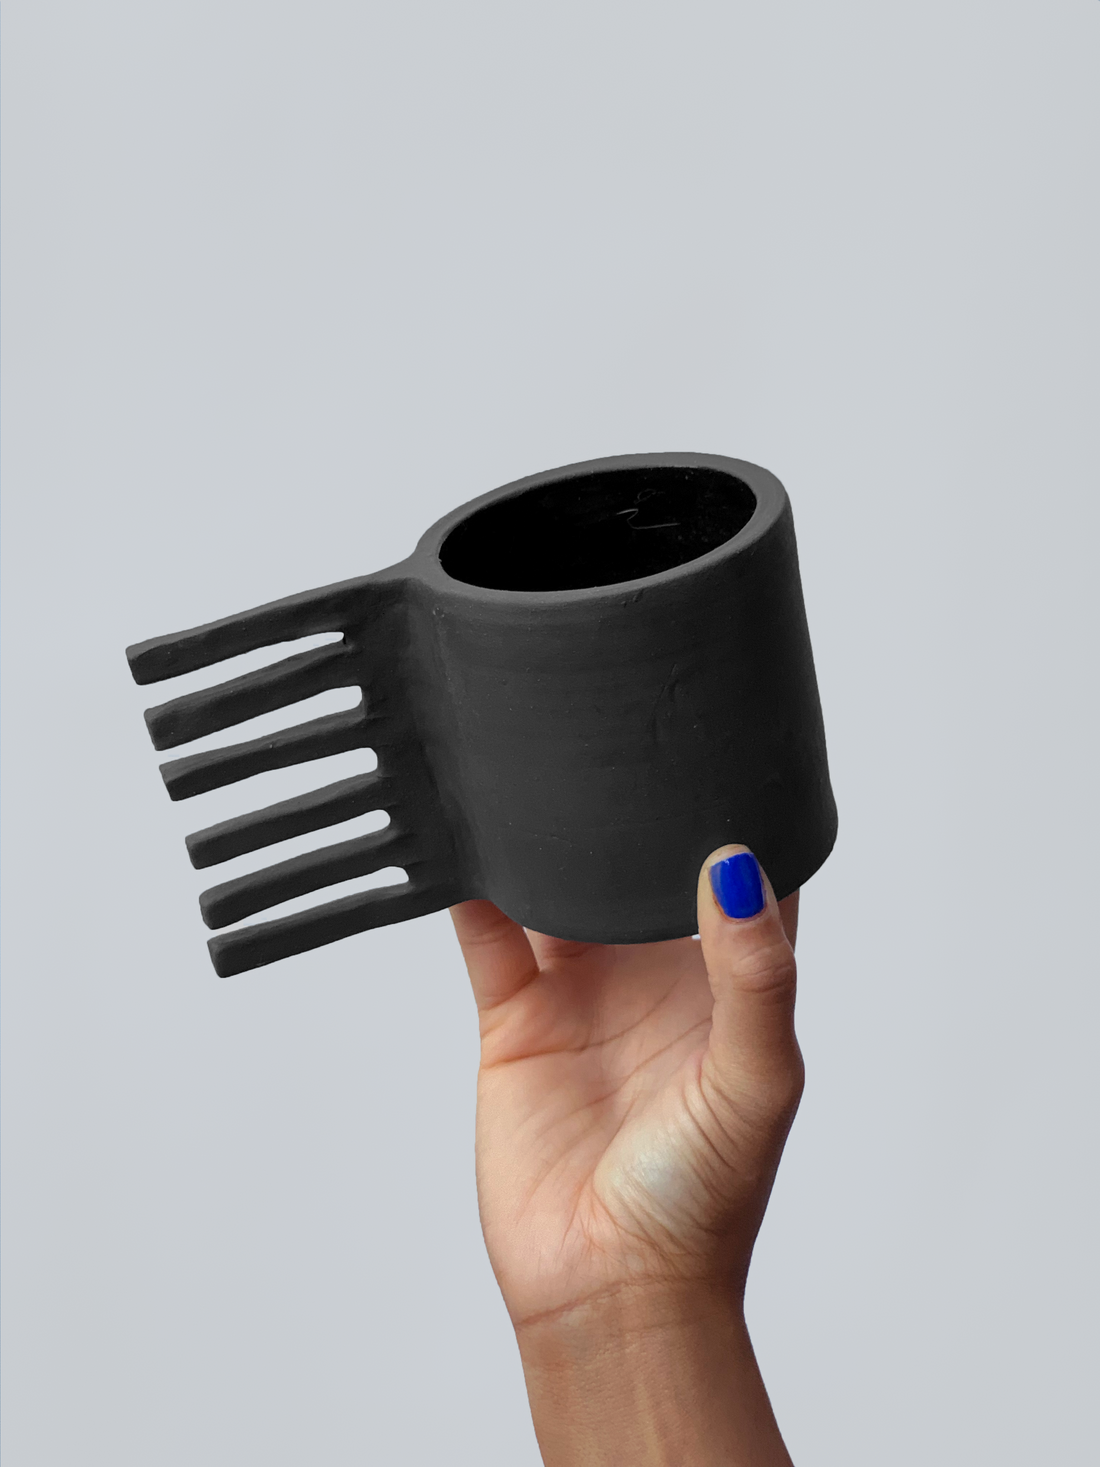 Black matte stoneware ceramic mug with six long square bars as the handle.